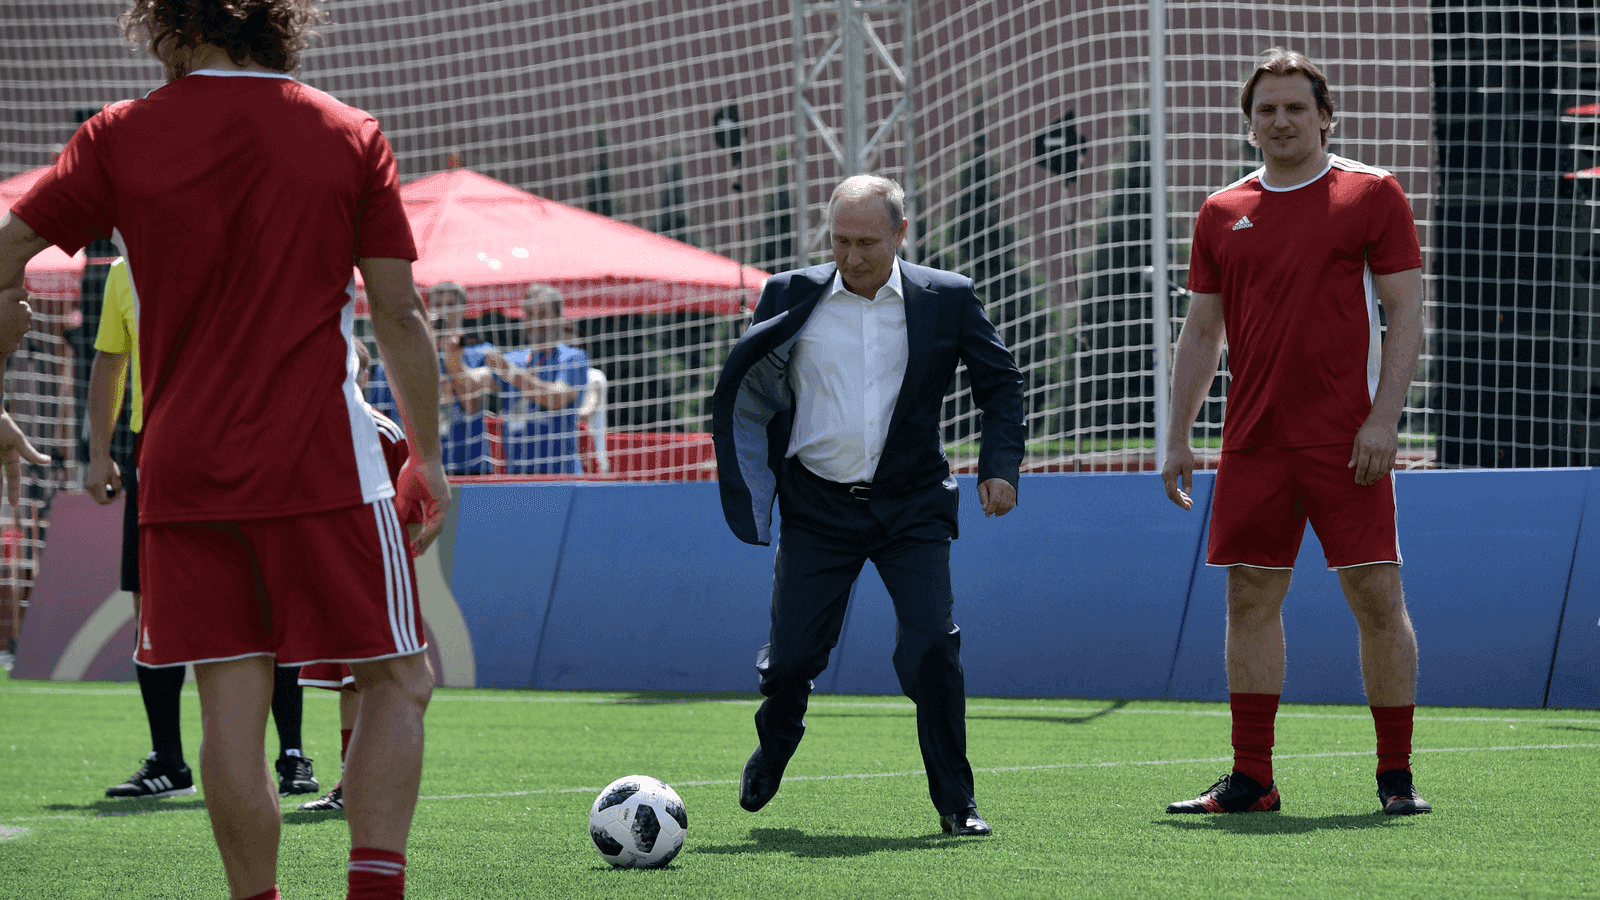 russian president vladimir putin kicks a soccer ball